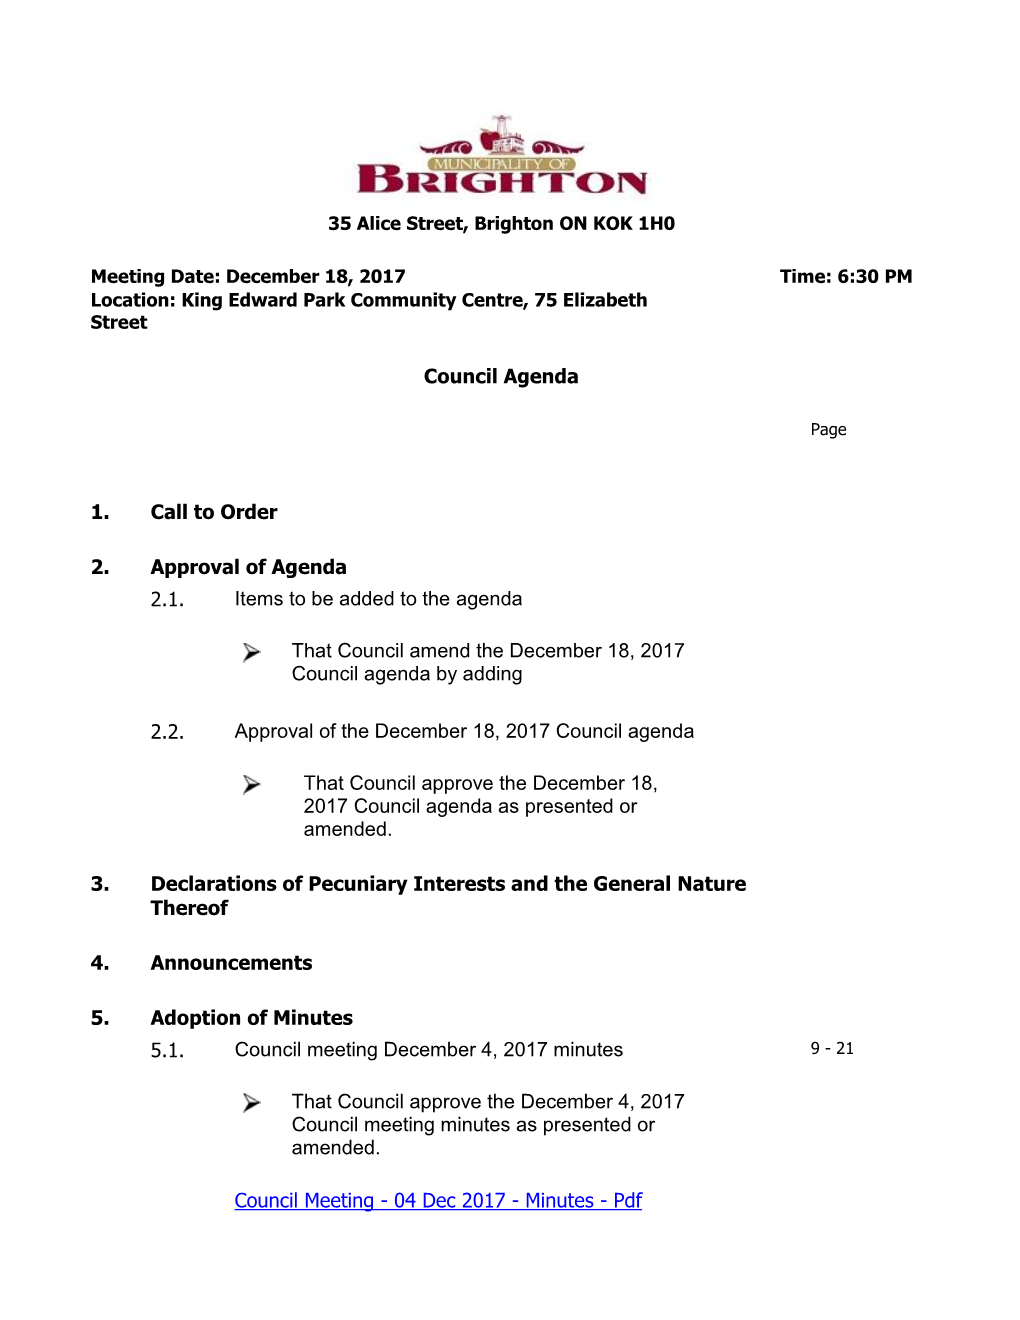 Council Meeting December 4, 2017 Minutes 9 - 21